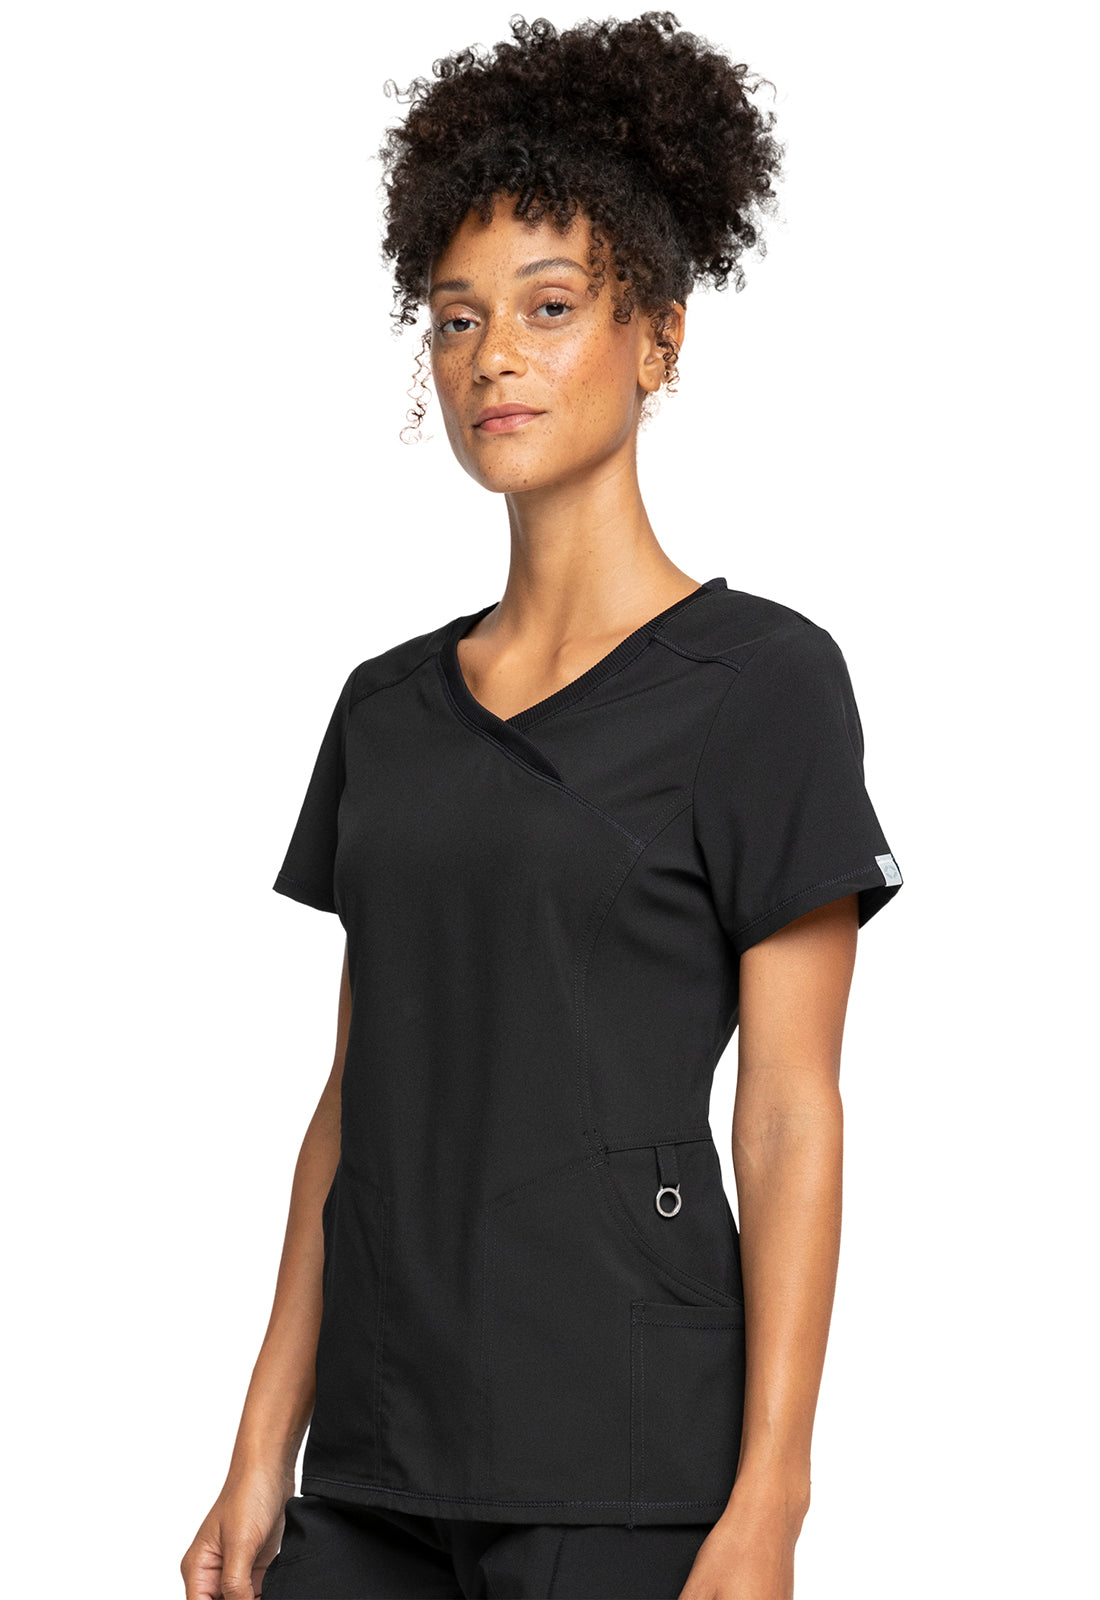 women's medical uniform tops, fashionable nurses uniforms, Women's Cherokee Infinity Mock Wrap Top